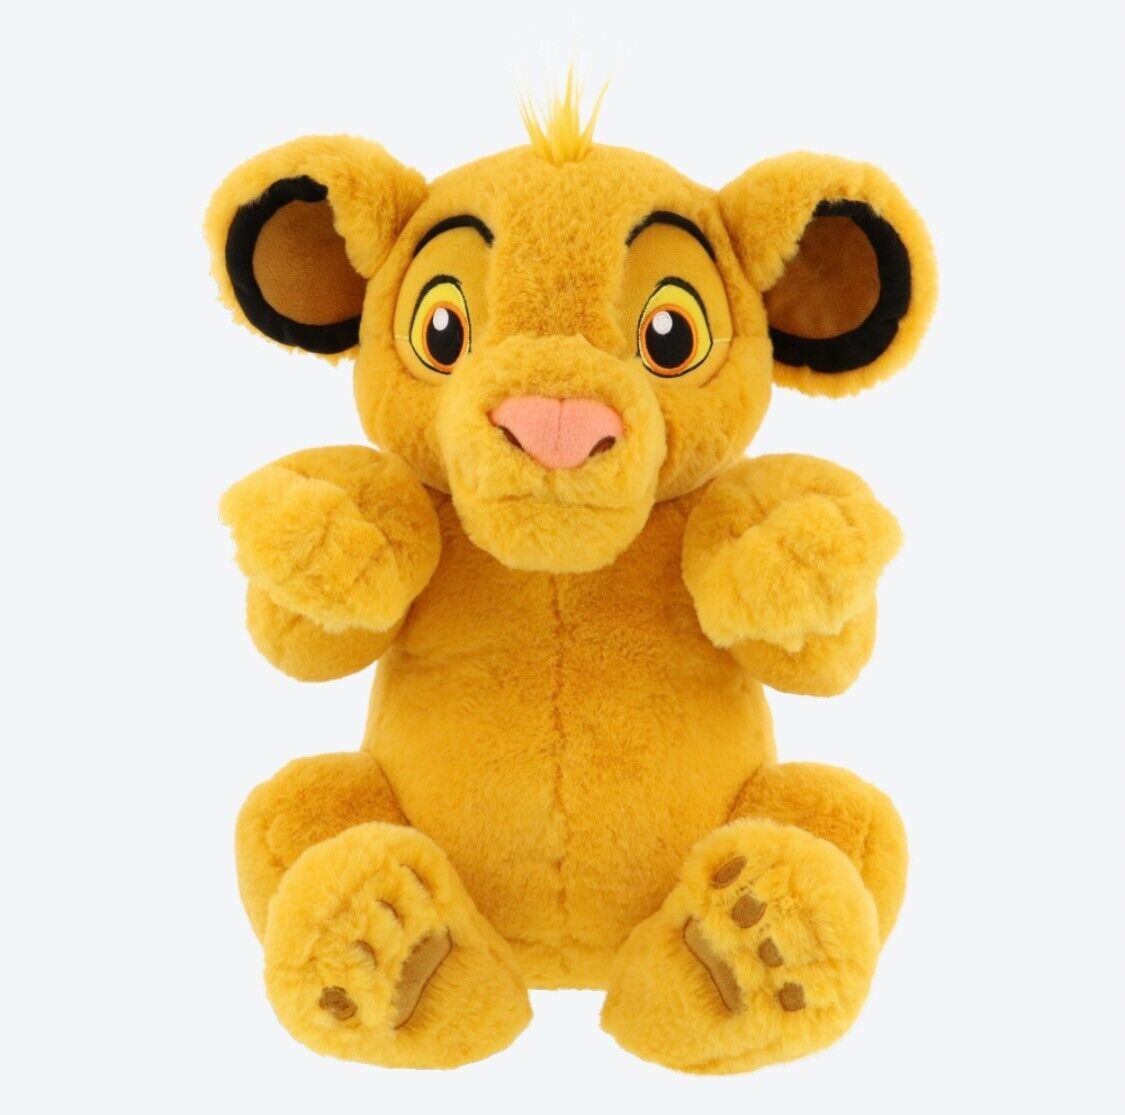 Tokyo Disney Resort Limited The Lion King Simba Fluffy Plush Toy Japan New Gift